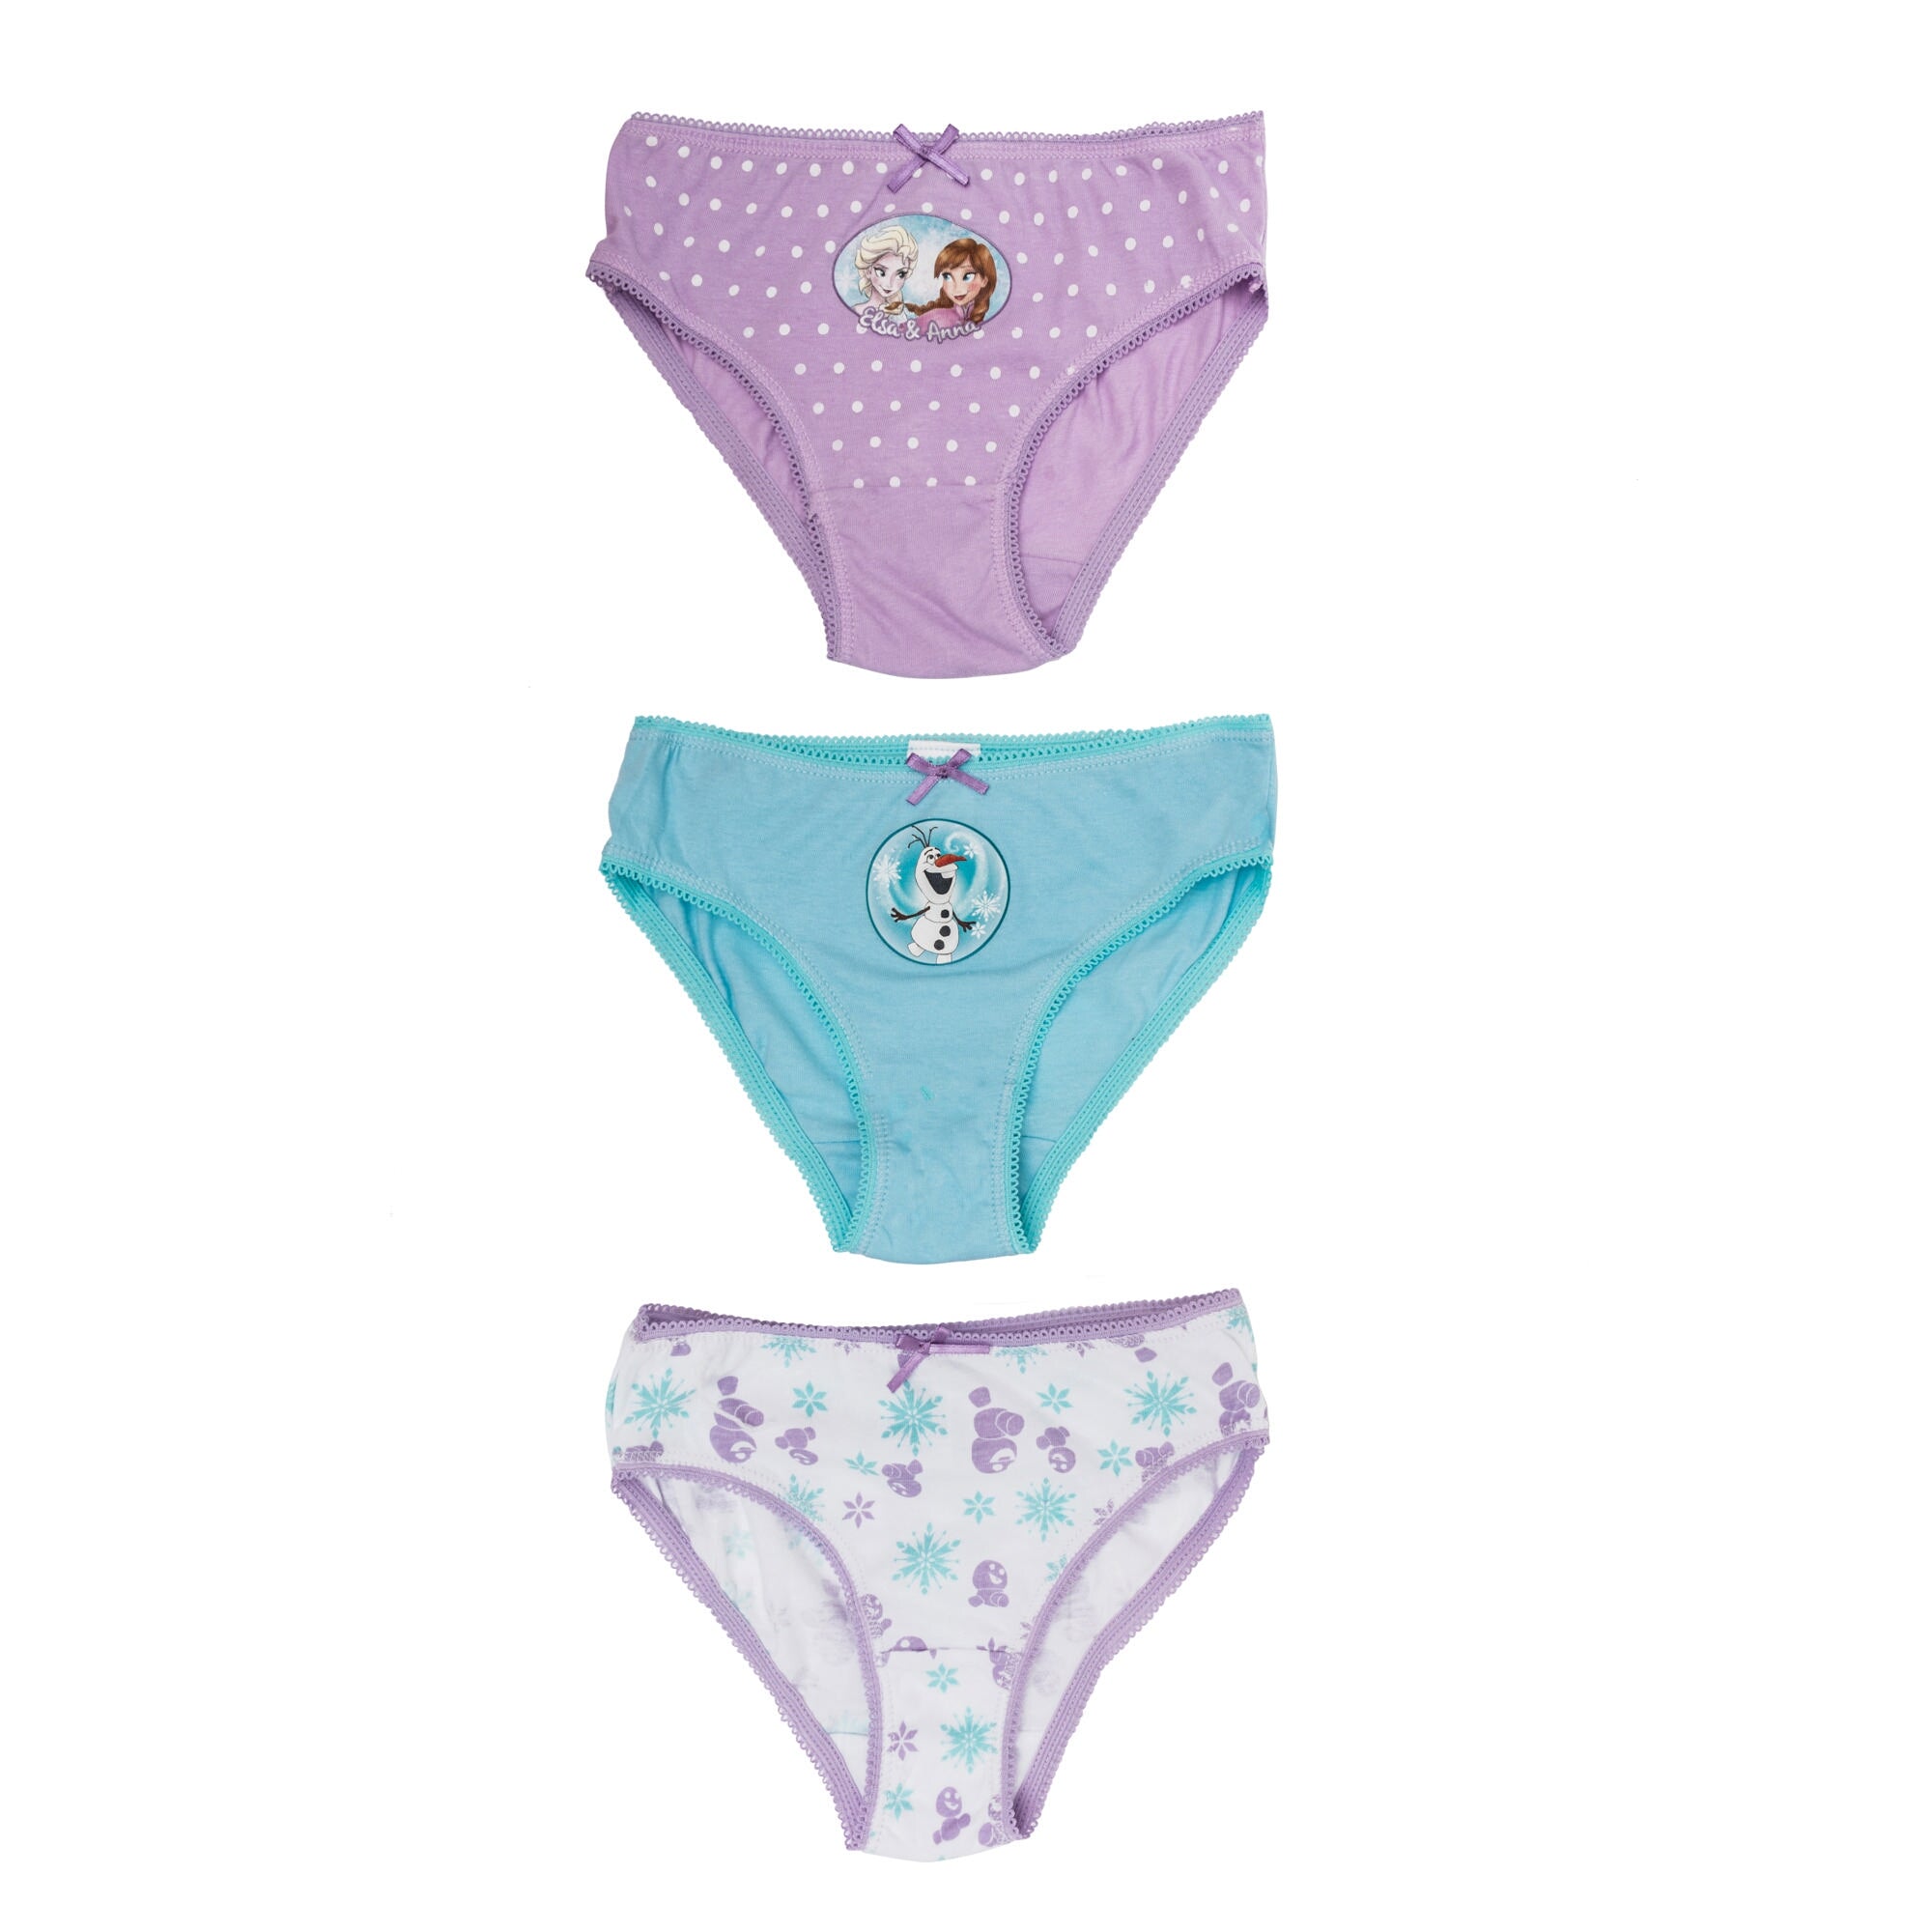 Frozen Toddler Girls' Training Pants, 6 - Pack, Sizes 2T-3T 